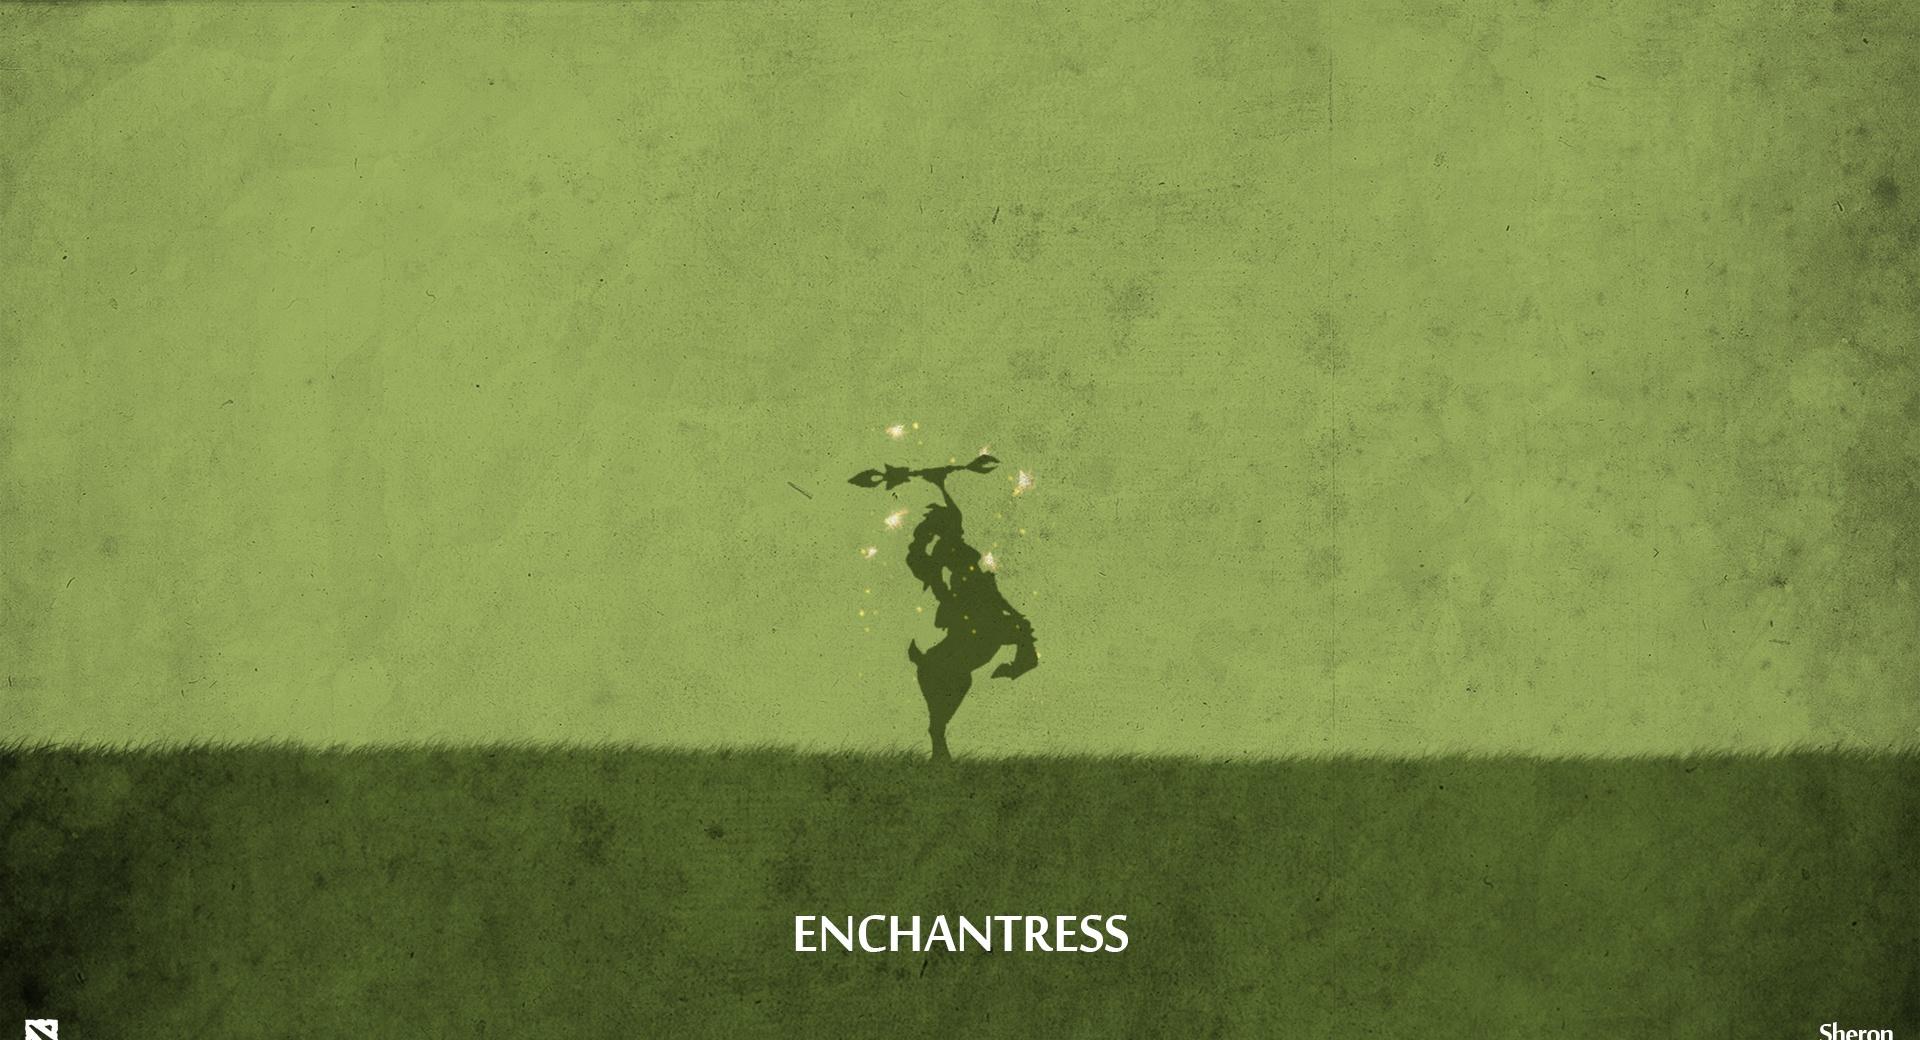 Enchantress - DotA 2 at 1280 x 960 size wallpapers HD quality